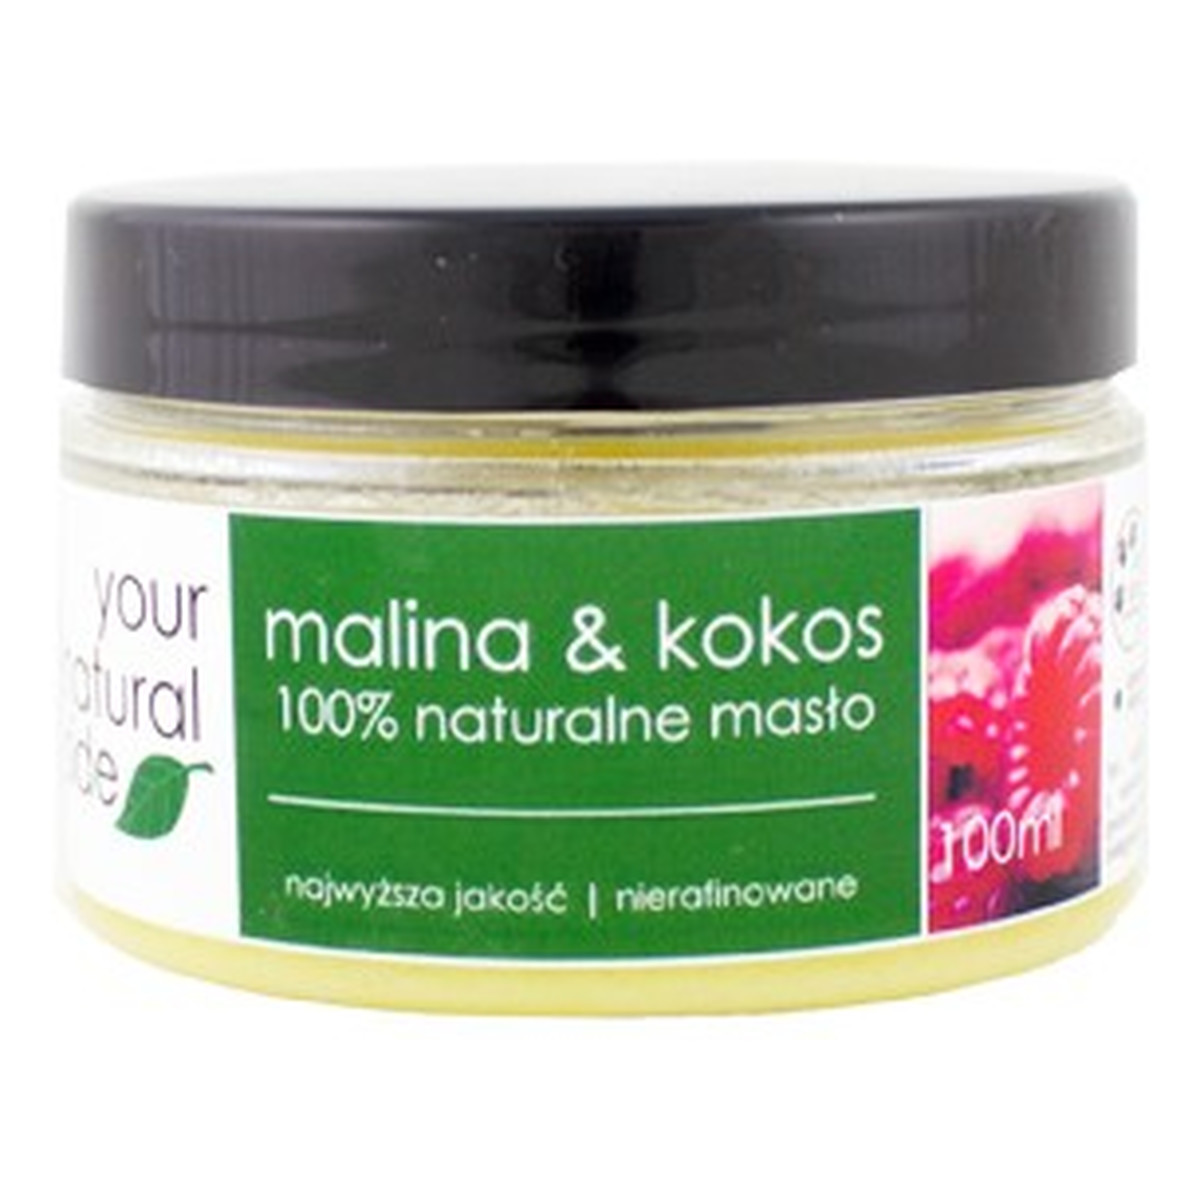 Your Natural Side Masło malina & kokos 100ml